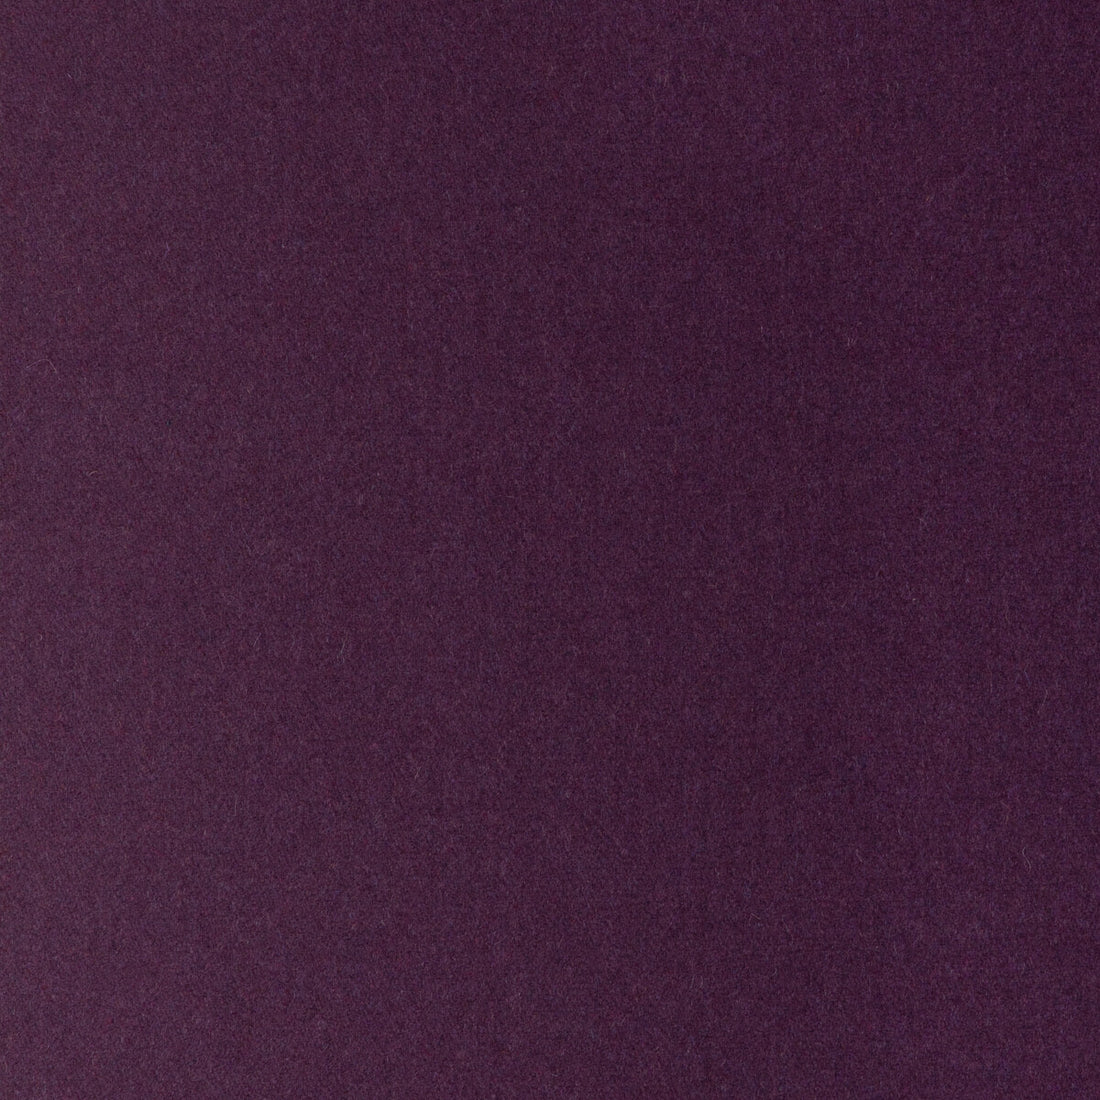 Jefferson Wool fabric in blackberry color - pattern 34397.10.0 - by Kravet Contract